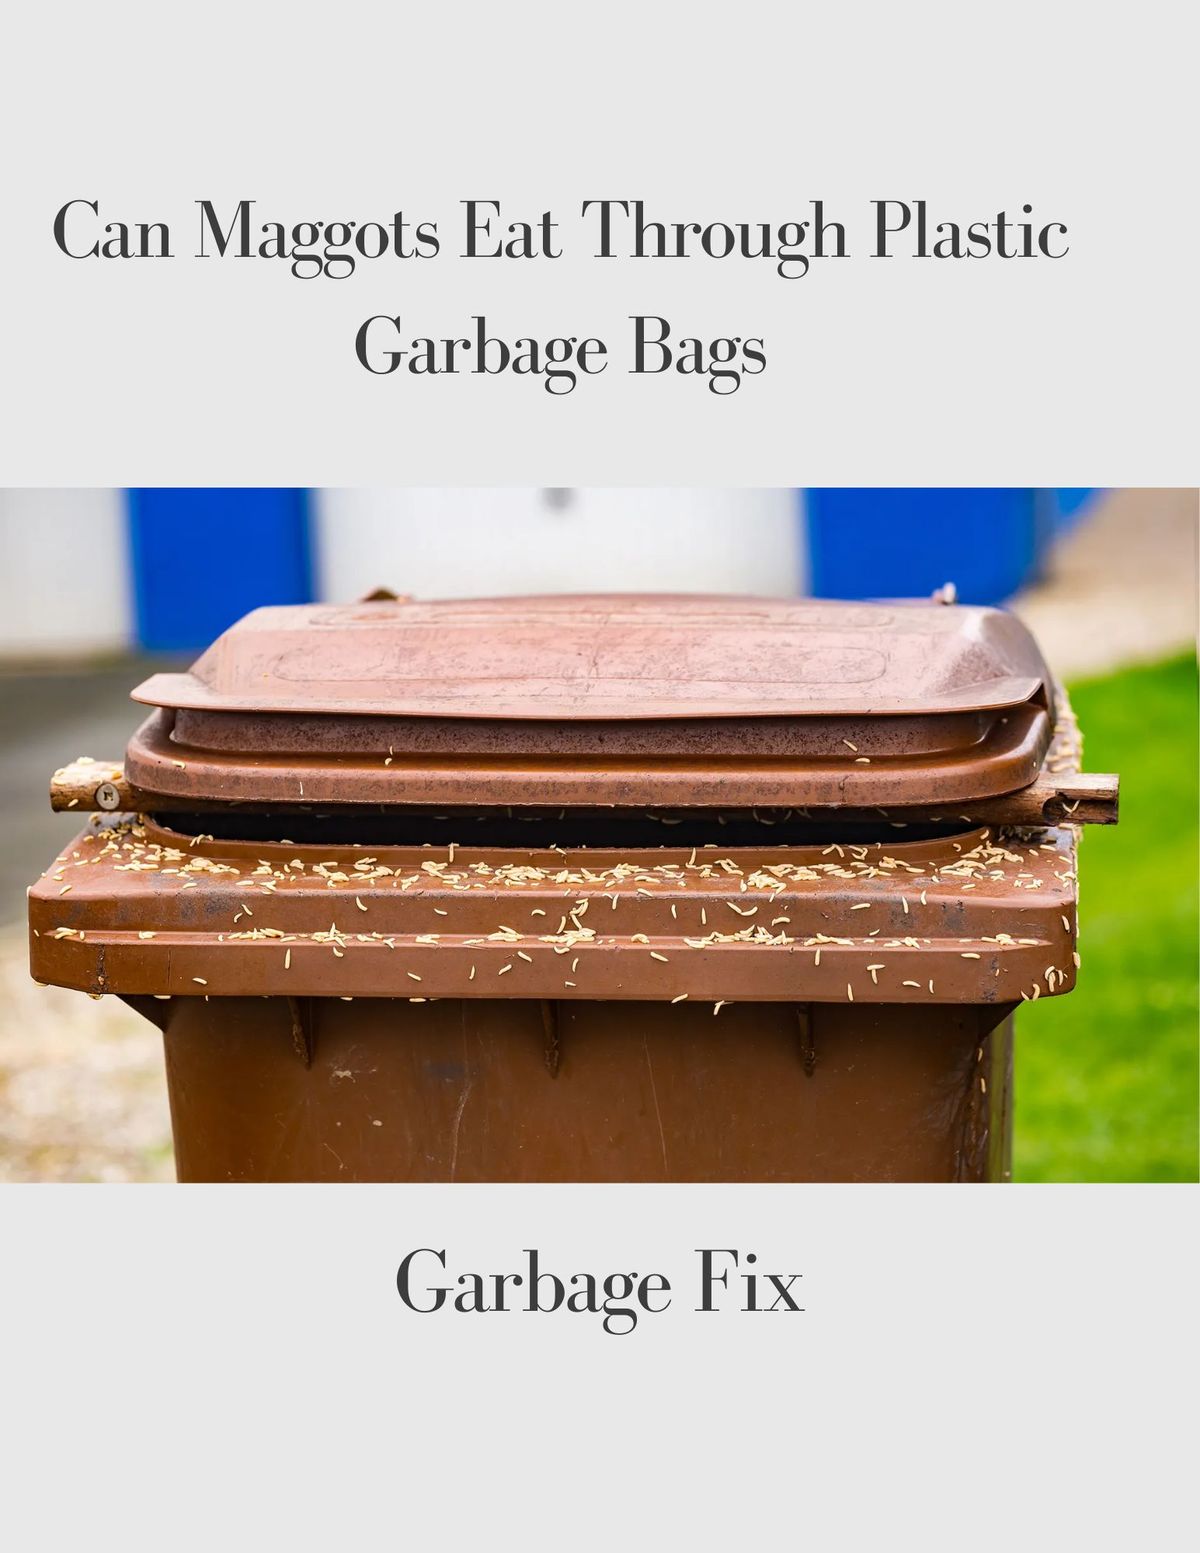 Can Maggots Eat Through Plastic Garbage Bags